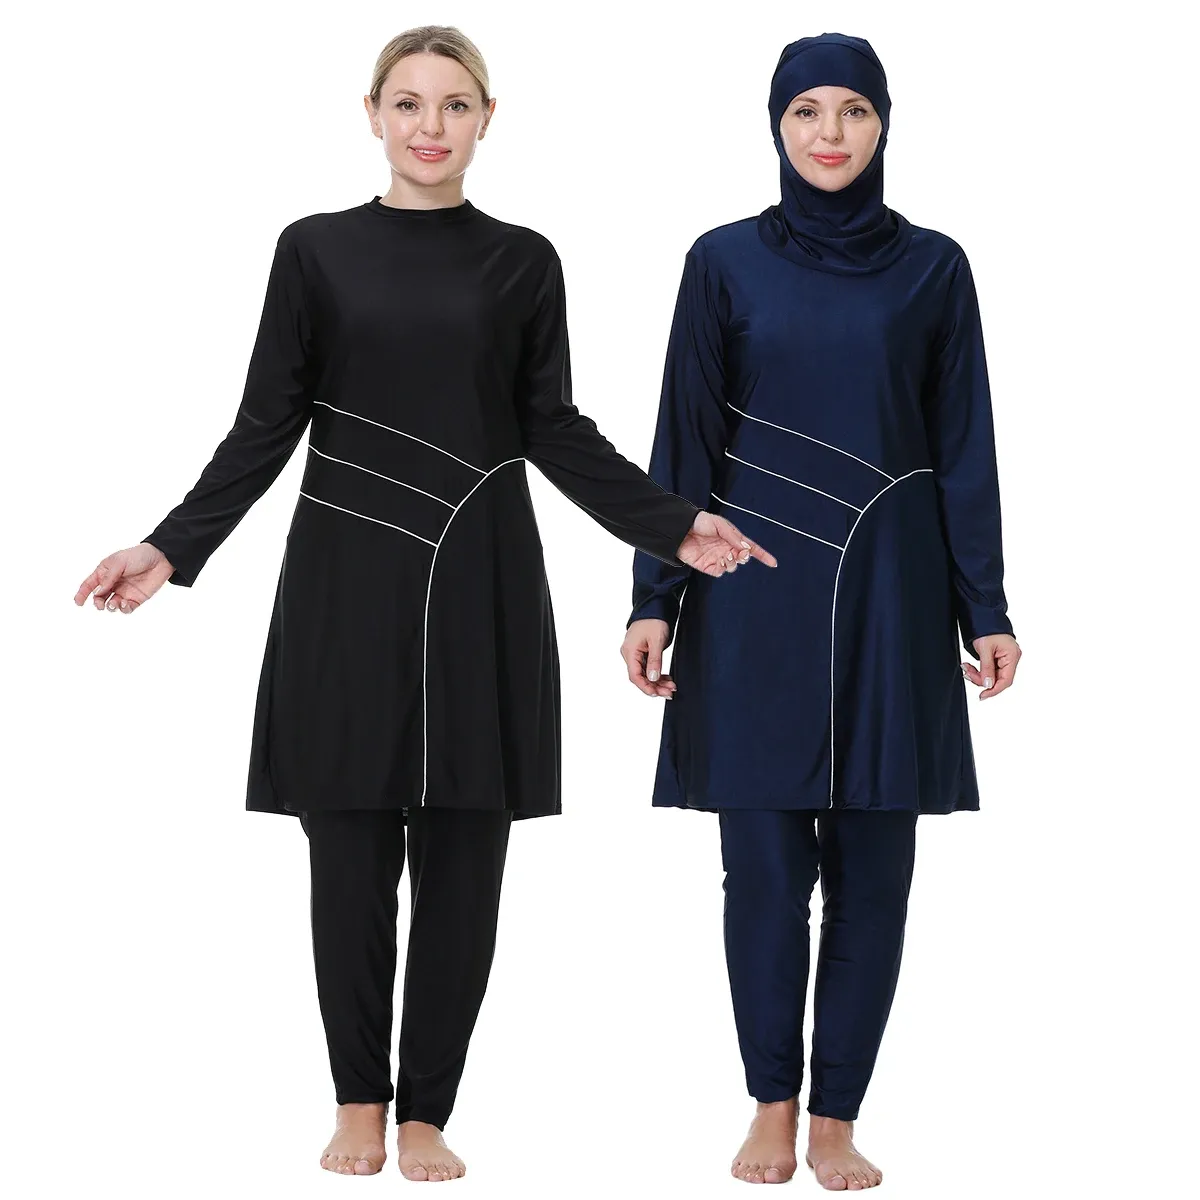 Wear Women Swimming Suit 3xl8xl Patchwork Muslim Full Cover Tankinis 3pcs Hijab Long Sleeves Sport Swimwear Islamic Burkinis Wear